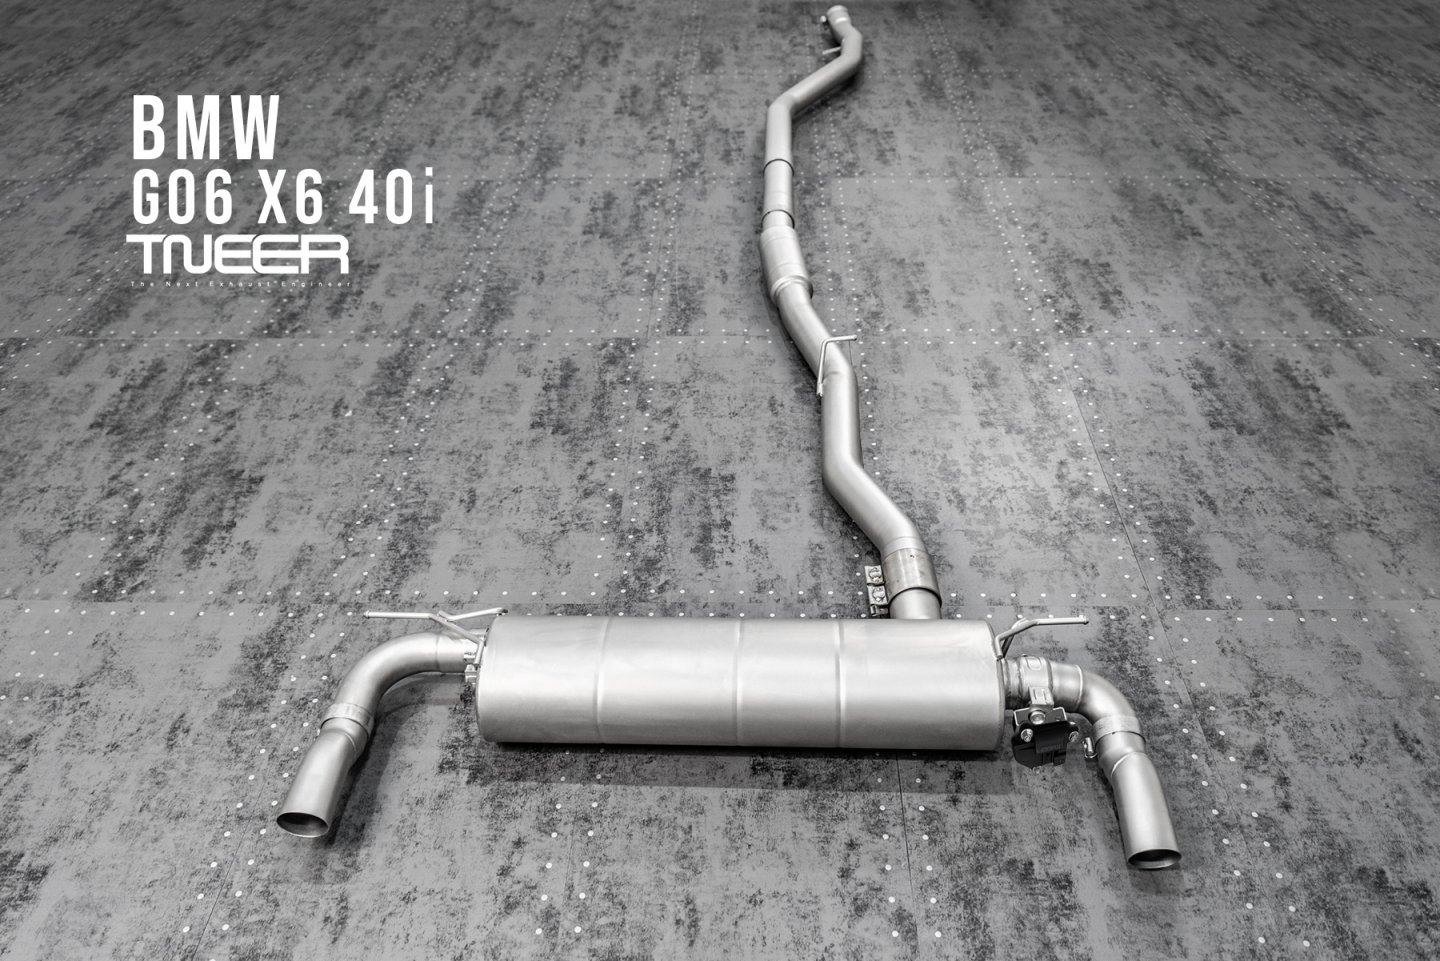 BMW G05 X5 / G06 X6 40i TNEER Performance Exhaust System